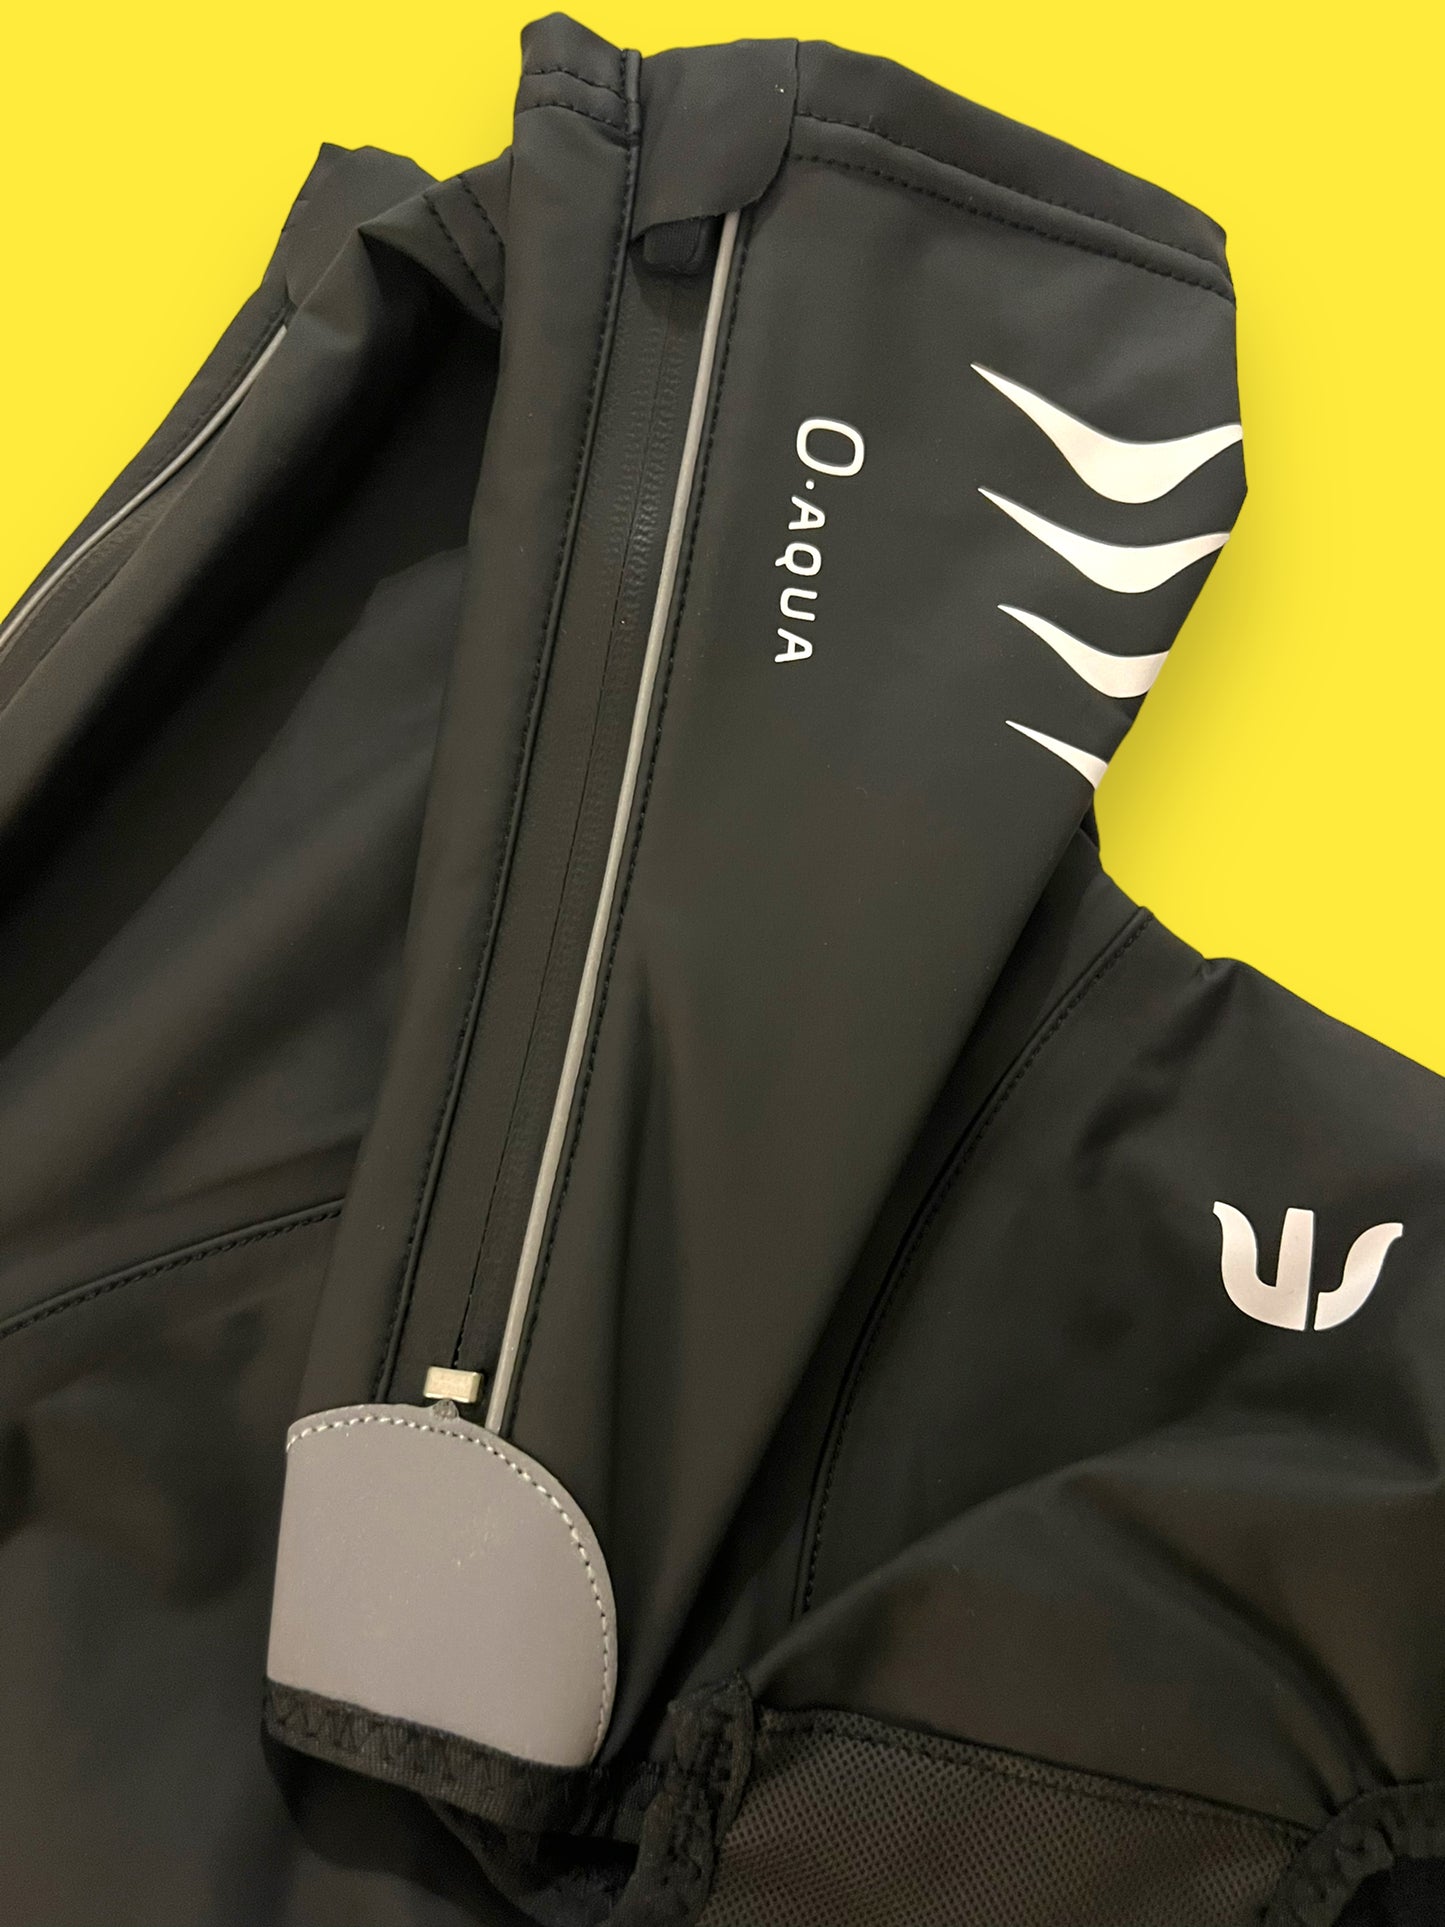 'O-Aqua' Rain Overshoes Waterproof Shoe Covers | Vermarc | Sport Vlaanderen / Baloise | Pro Cycling Kit